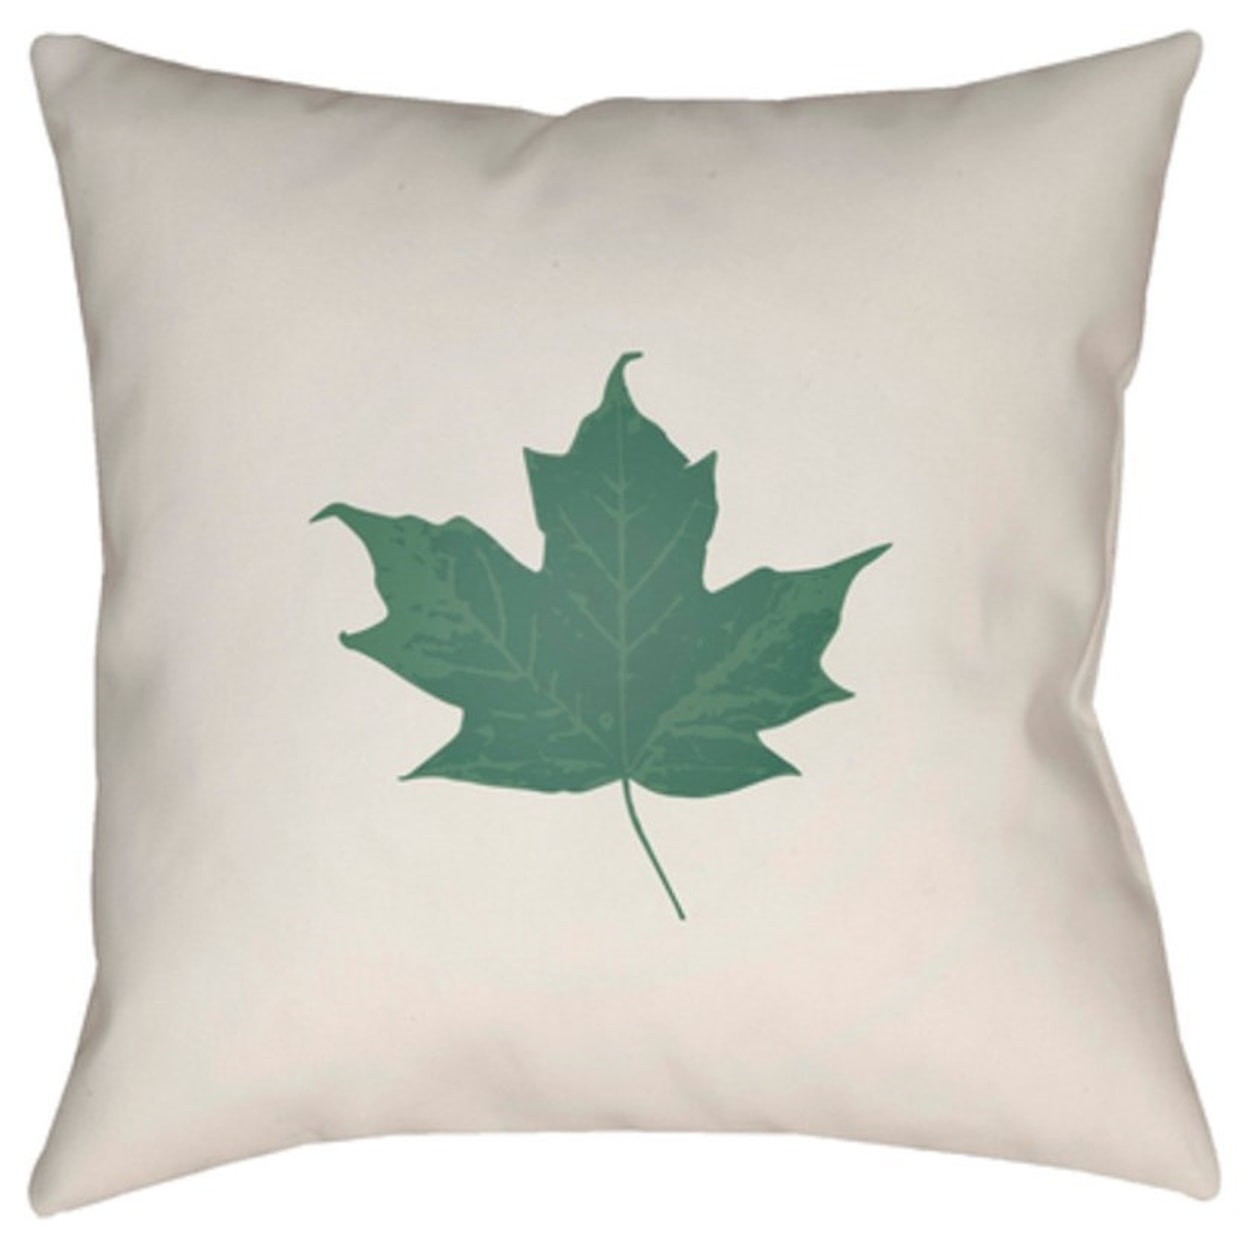 Surya Maple Pillow